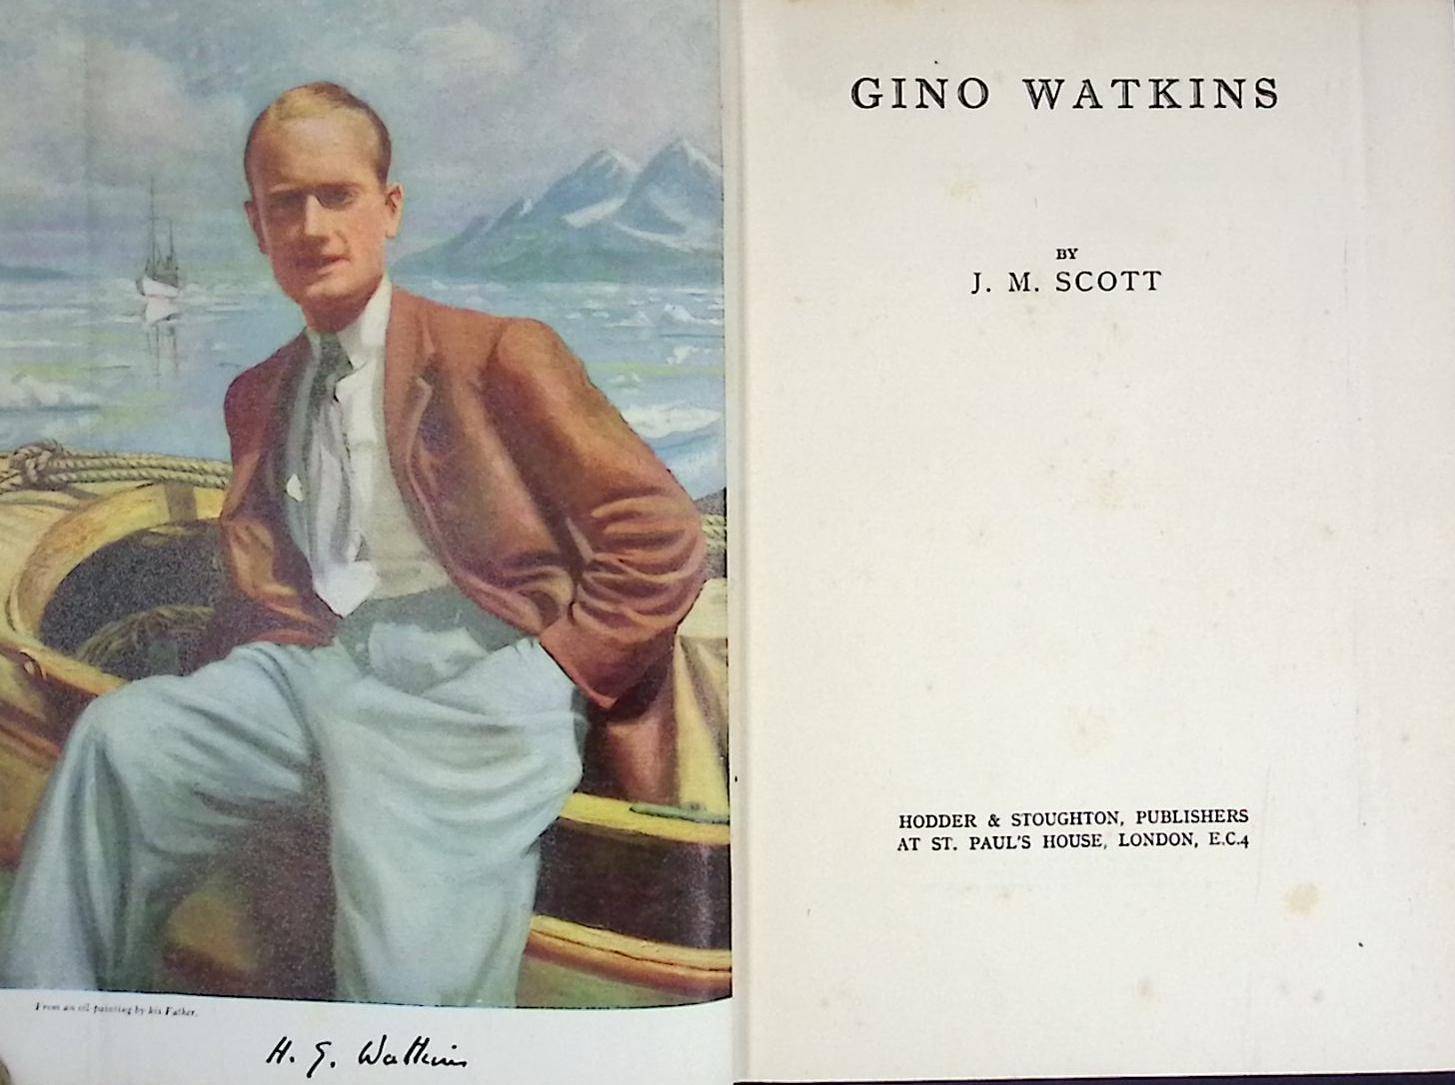 Gino Watkins